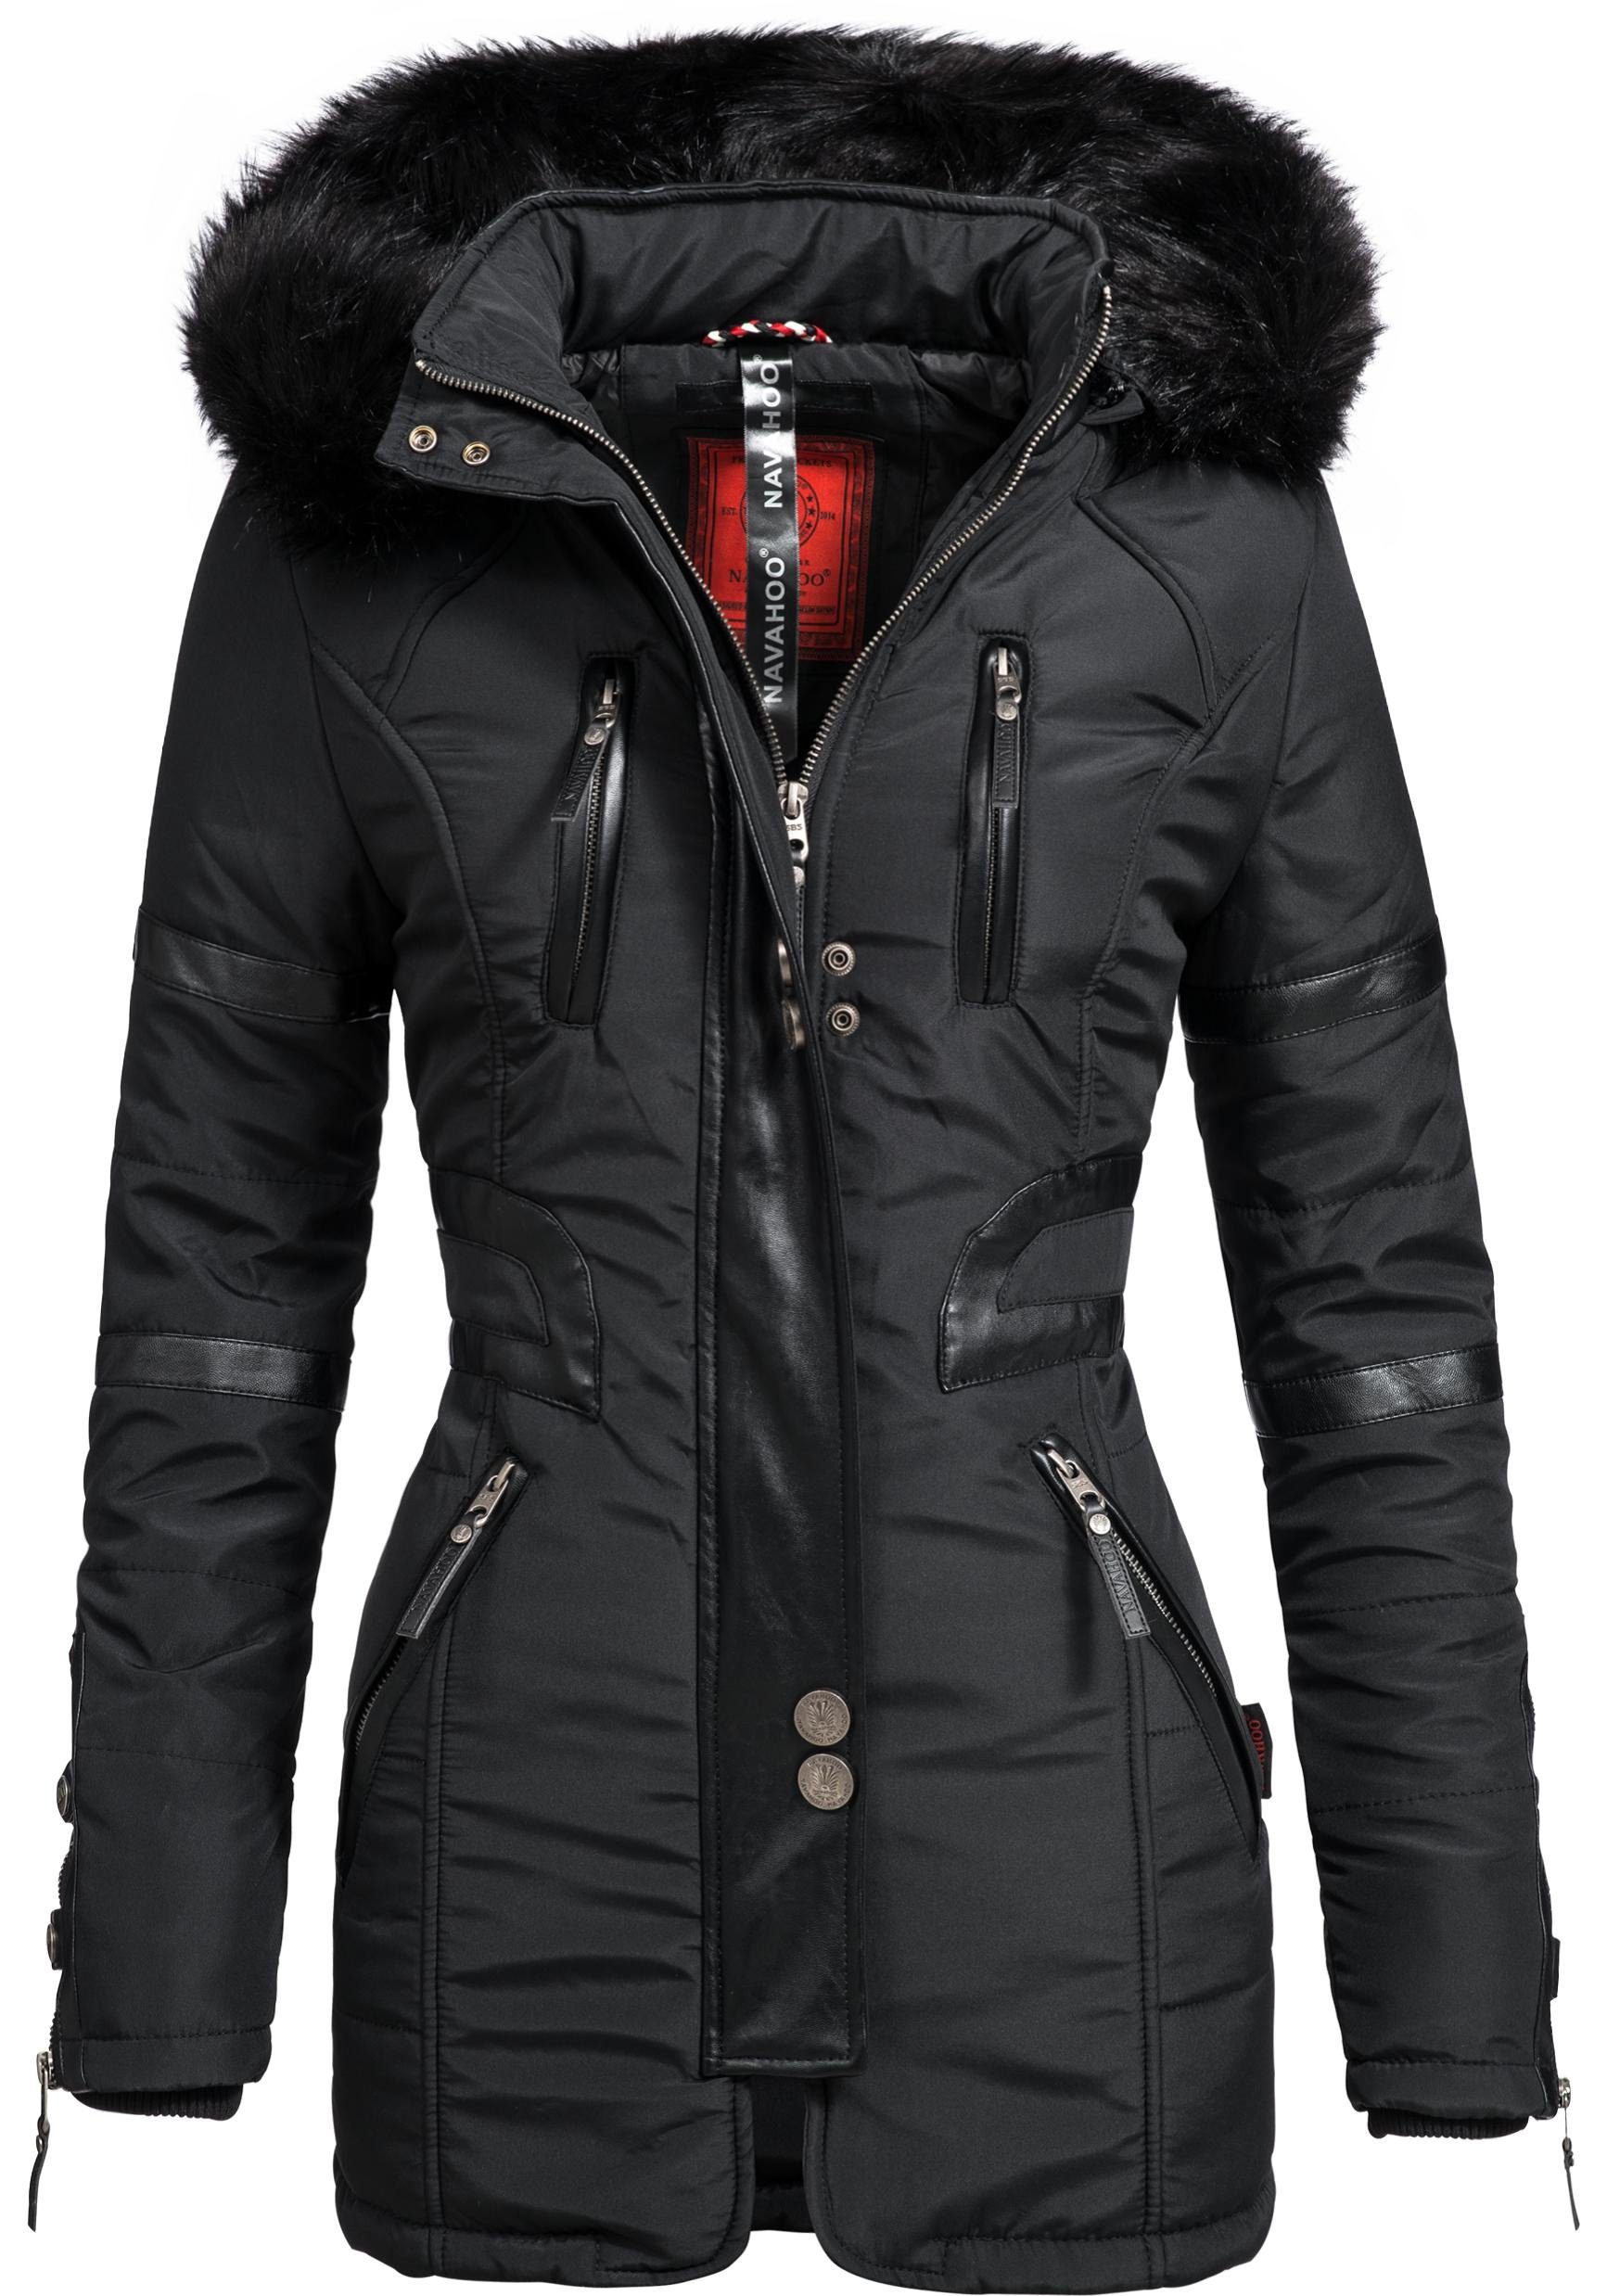 Navahoo Wintermantel Moony stylischer Damen Winter Jacke mit Kapuze schwarz